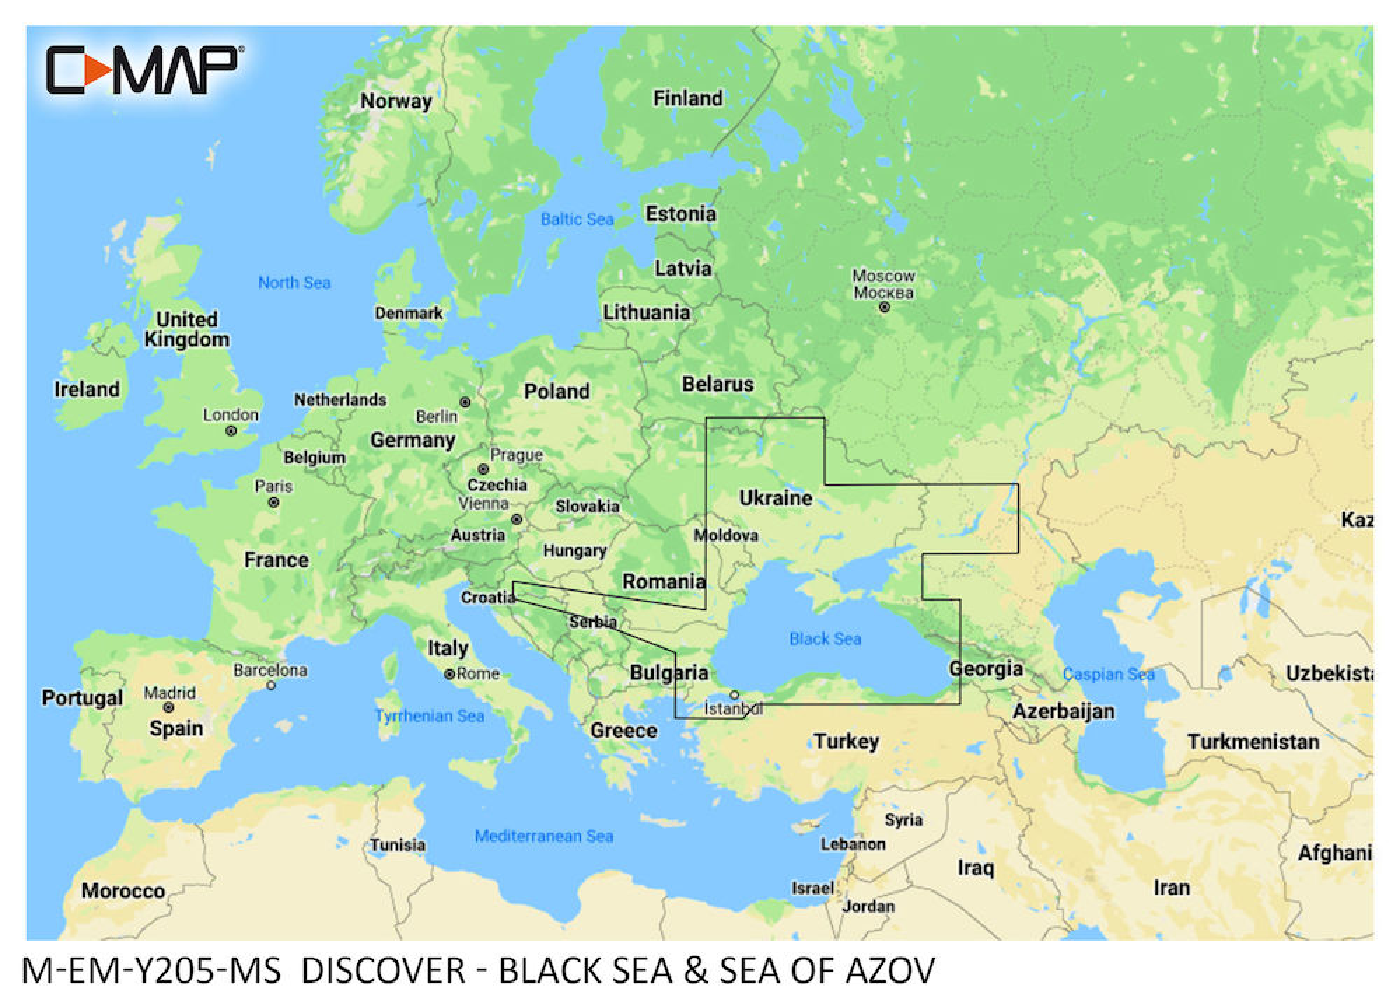 C-MAP Discover Black Sea and Sea of Azov M-EM-Y205